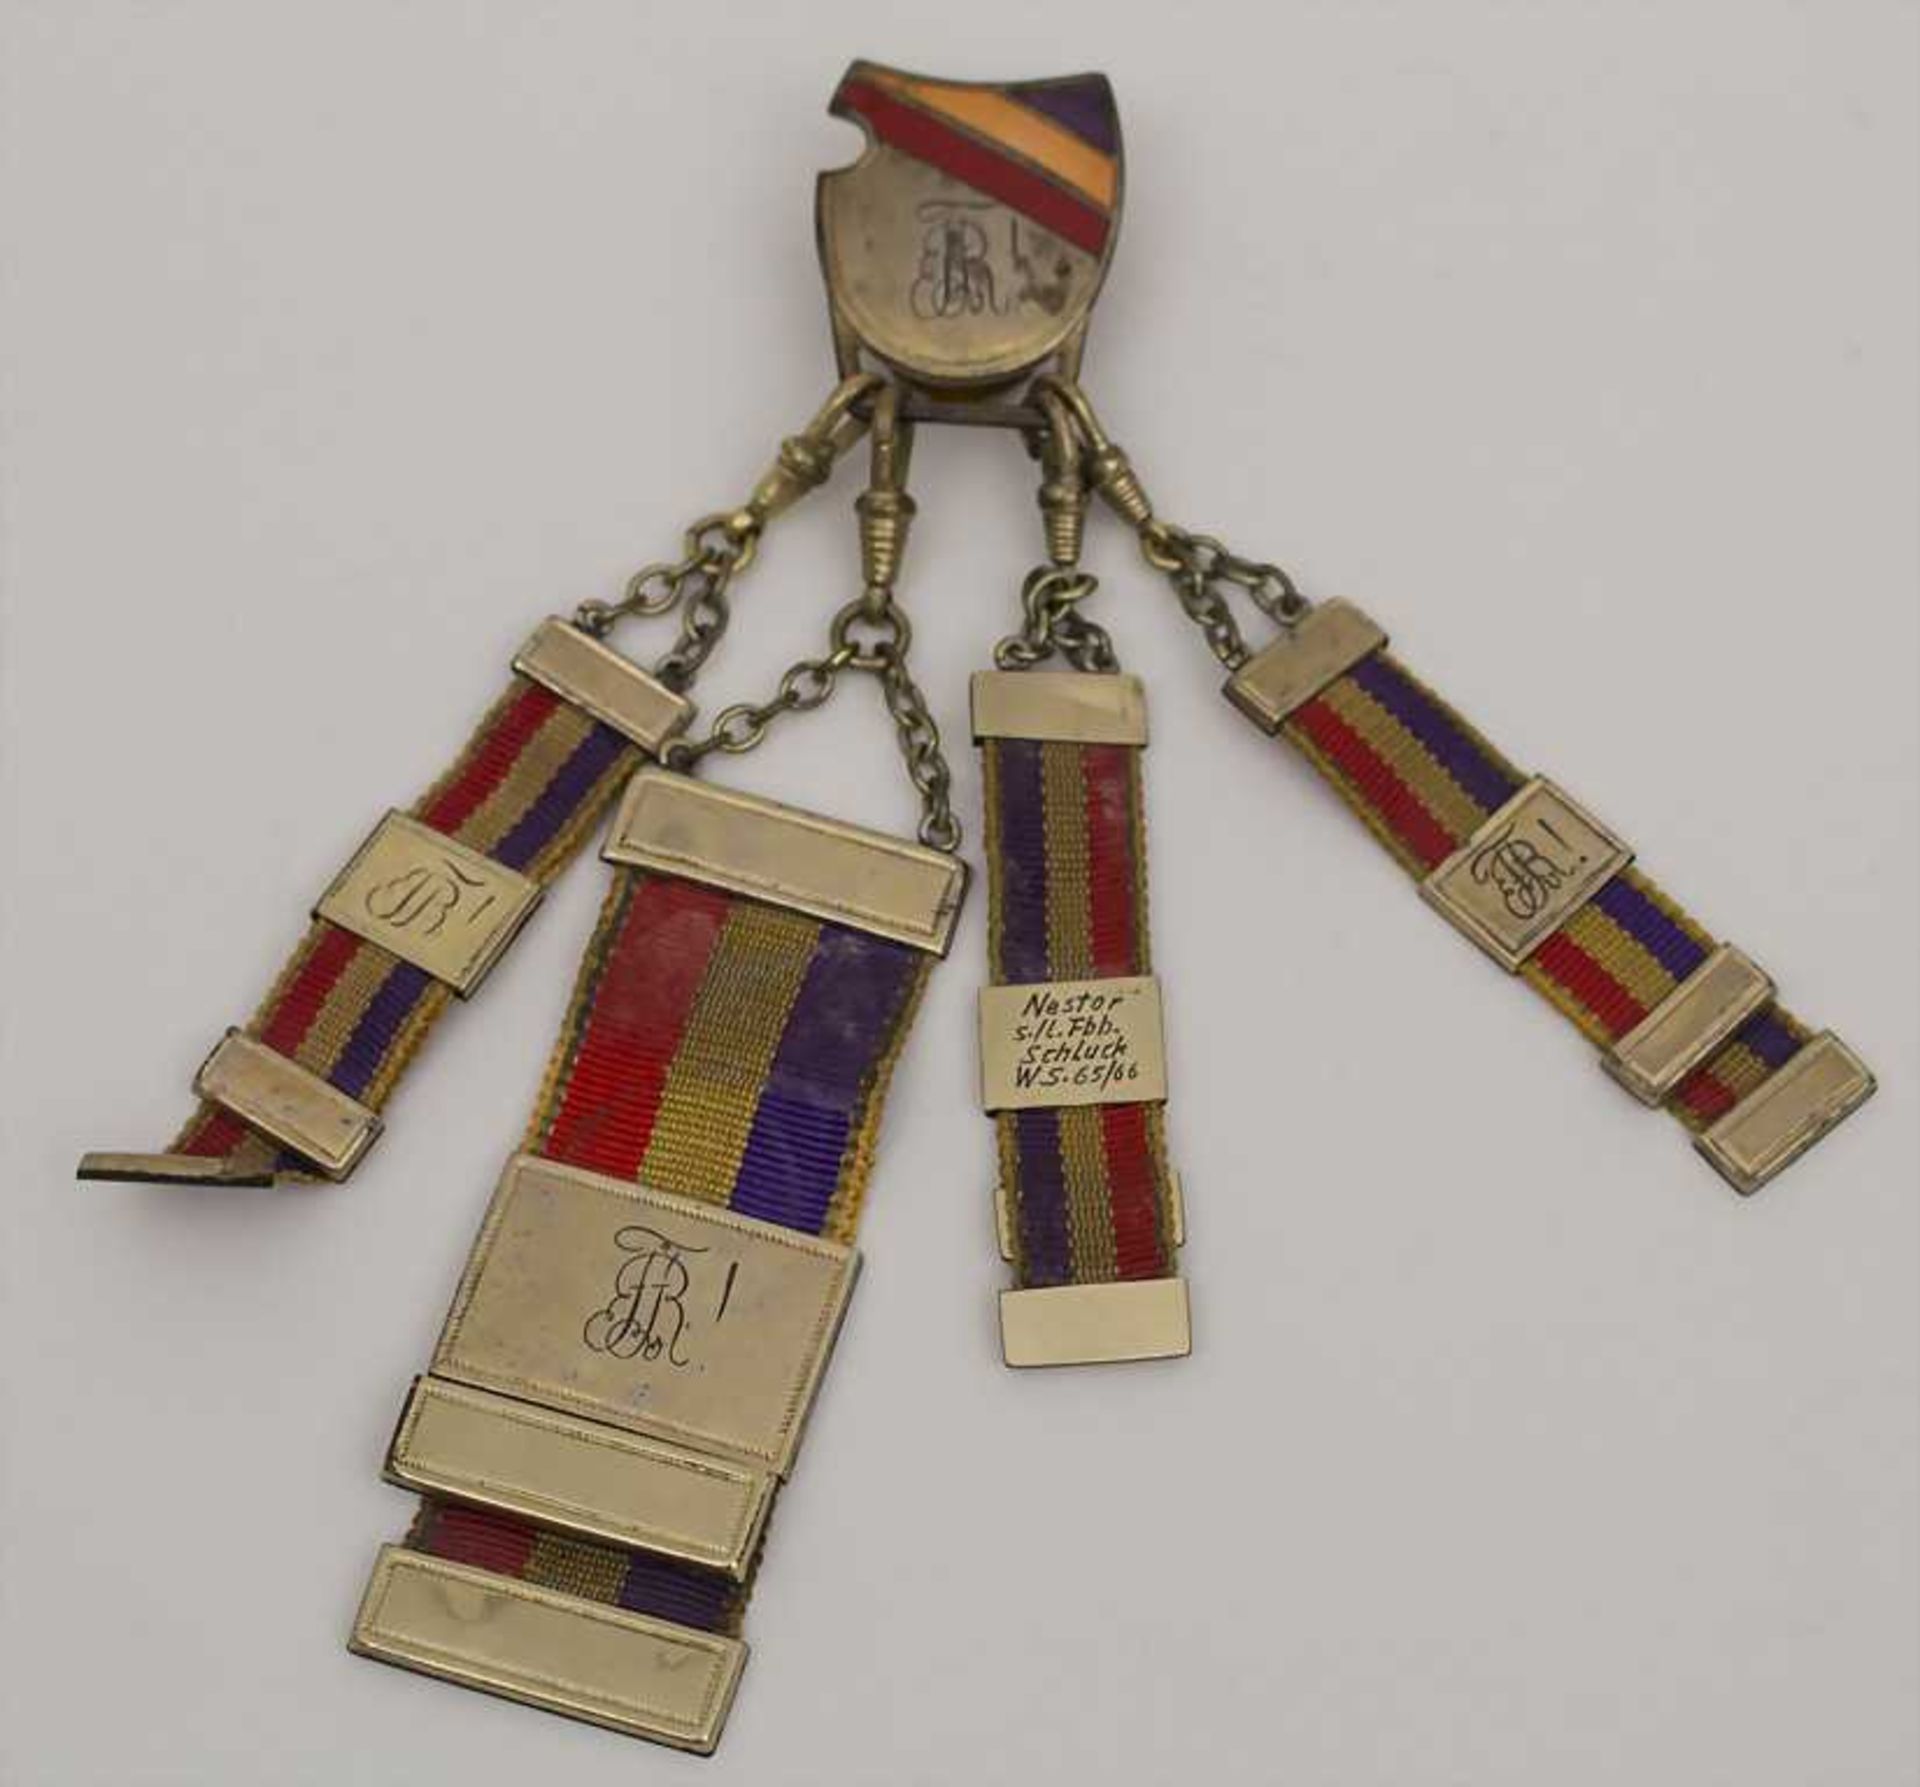 4 Studenika-Zipfel mit Spange / Studentish Badges with Buckle, 1965 Zustand: altersbedingt+